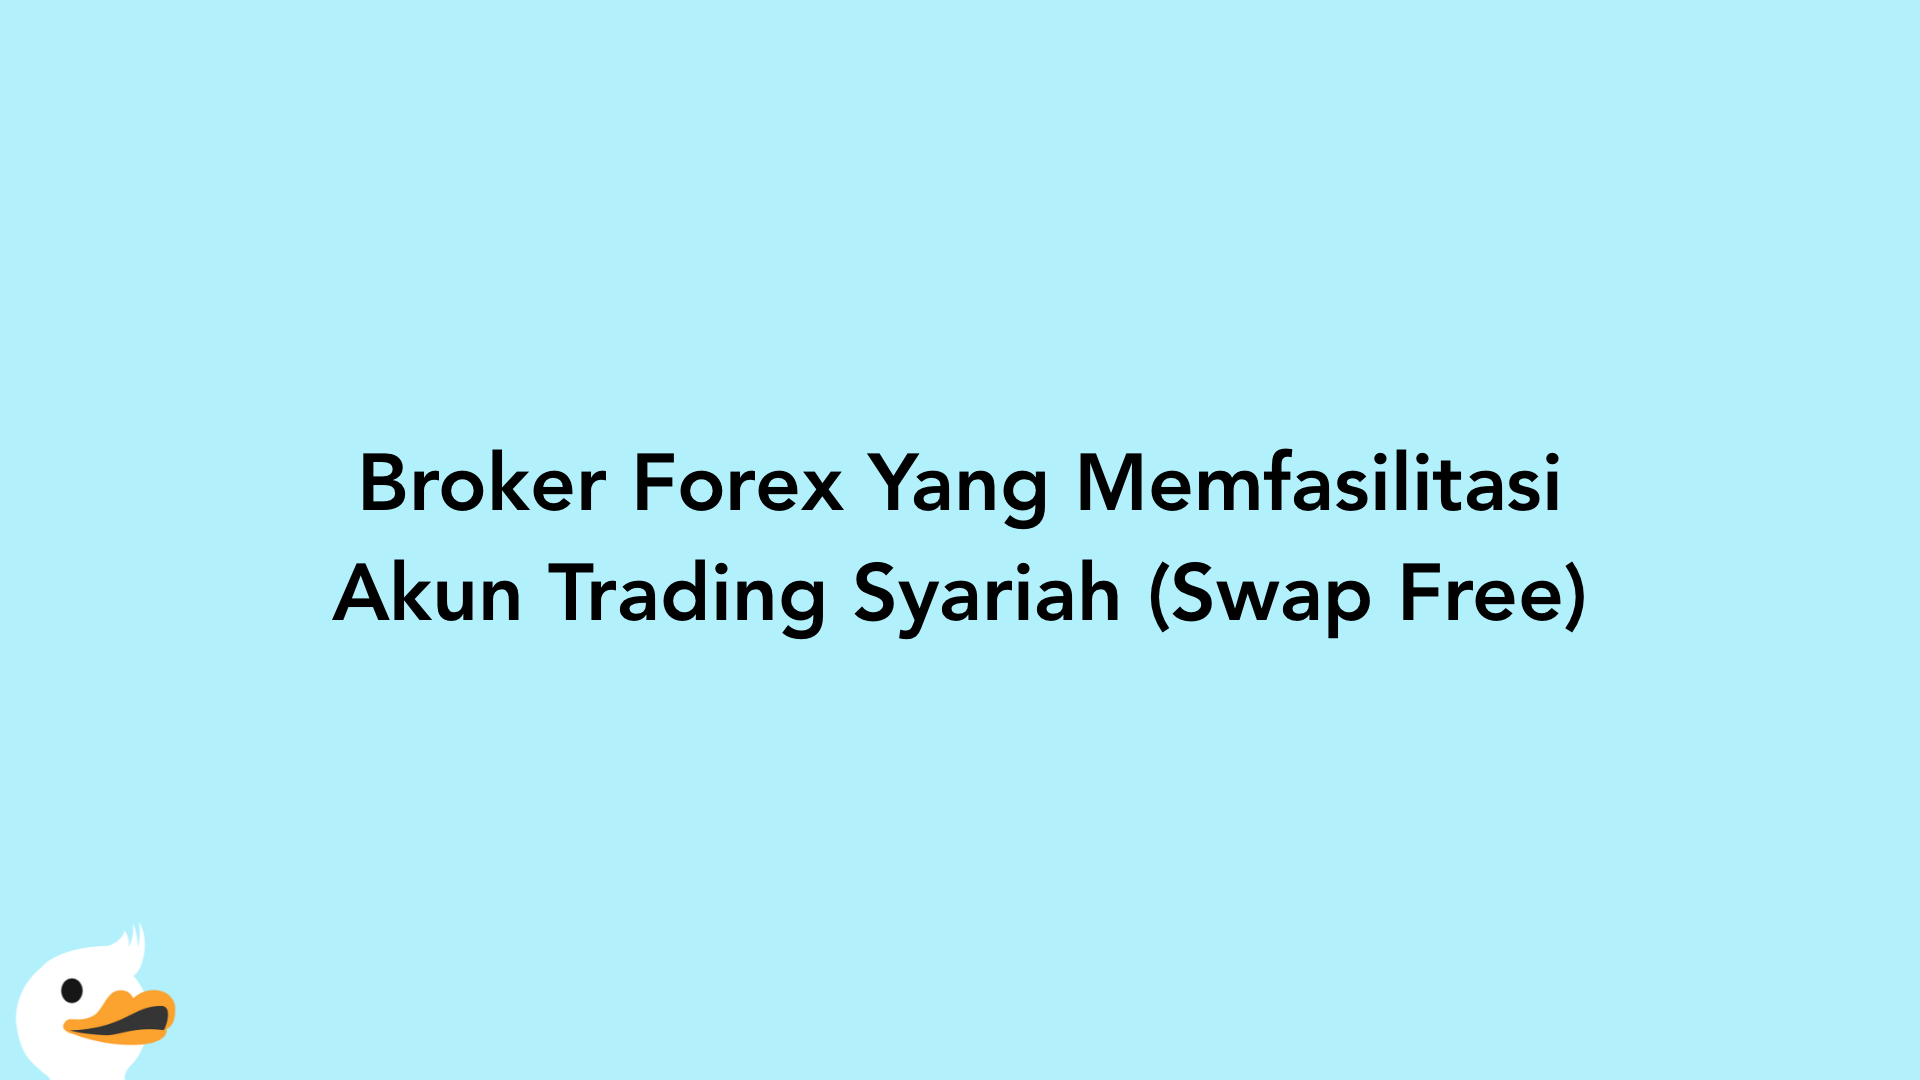 Broker Forex Yang Memfasilitasi Akun Trading Syariah (Swap Free)